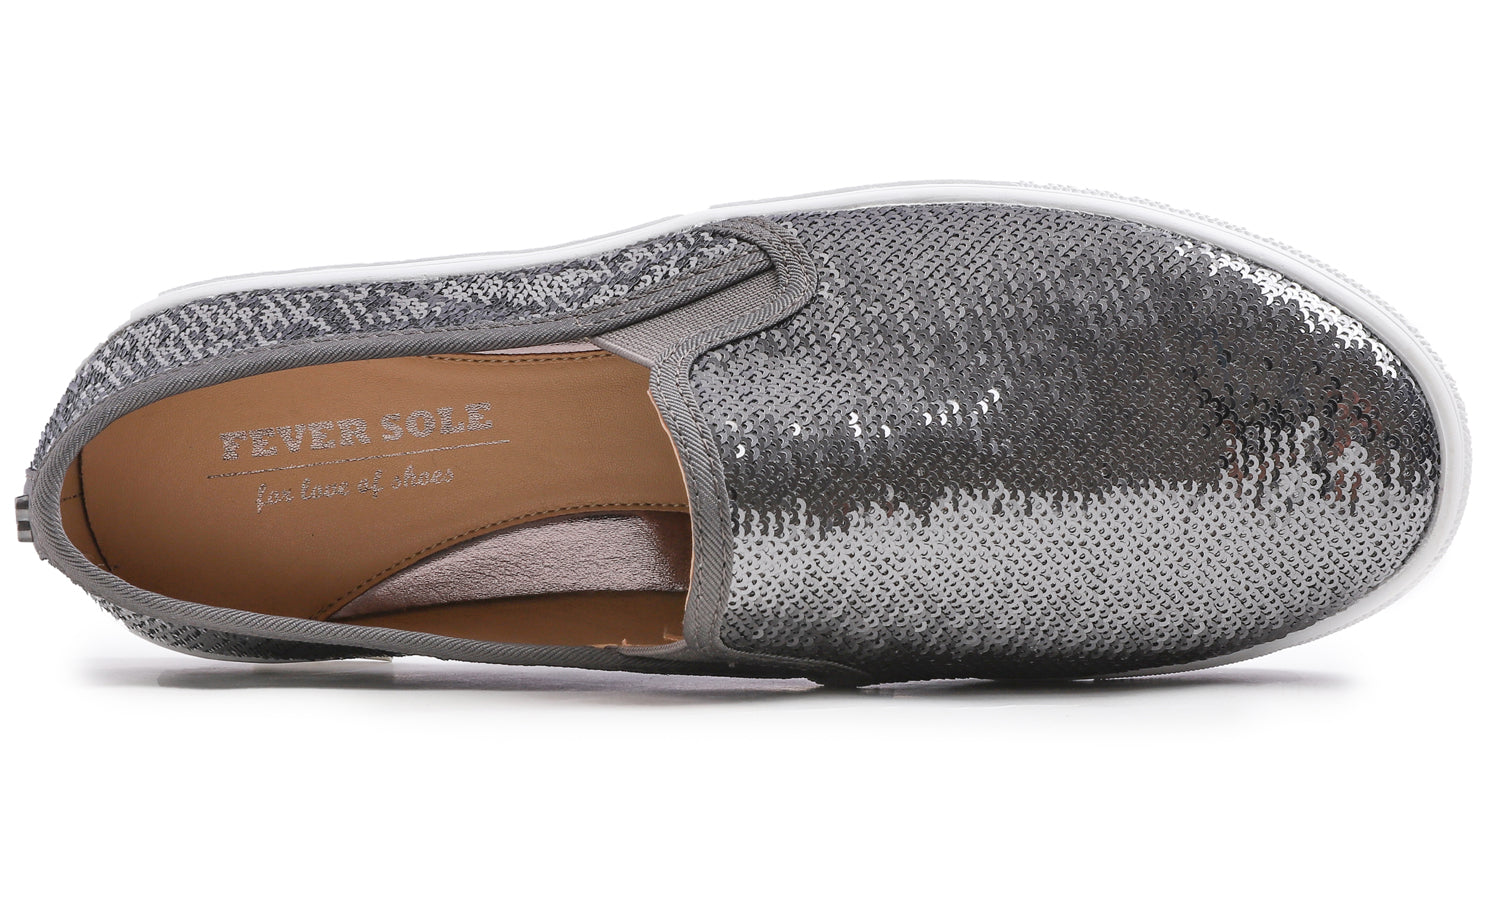 Feversole Women's Pewter Sequin Slip On Sneaker Casual Flat Loafers